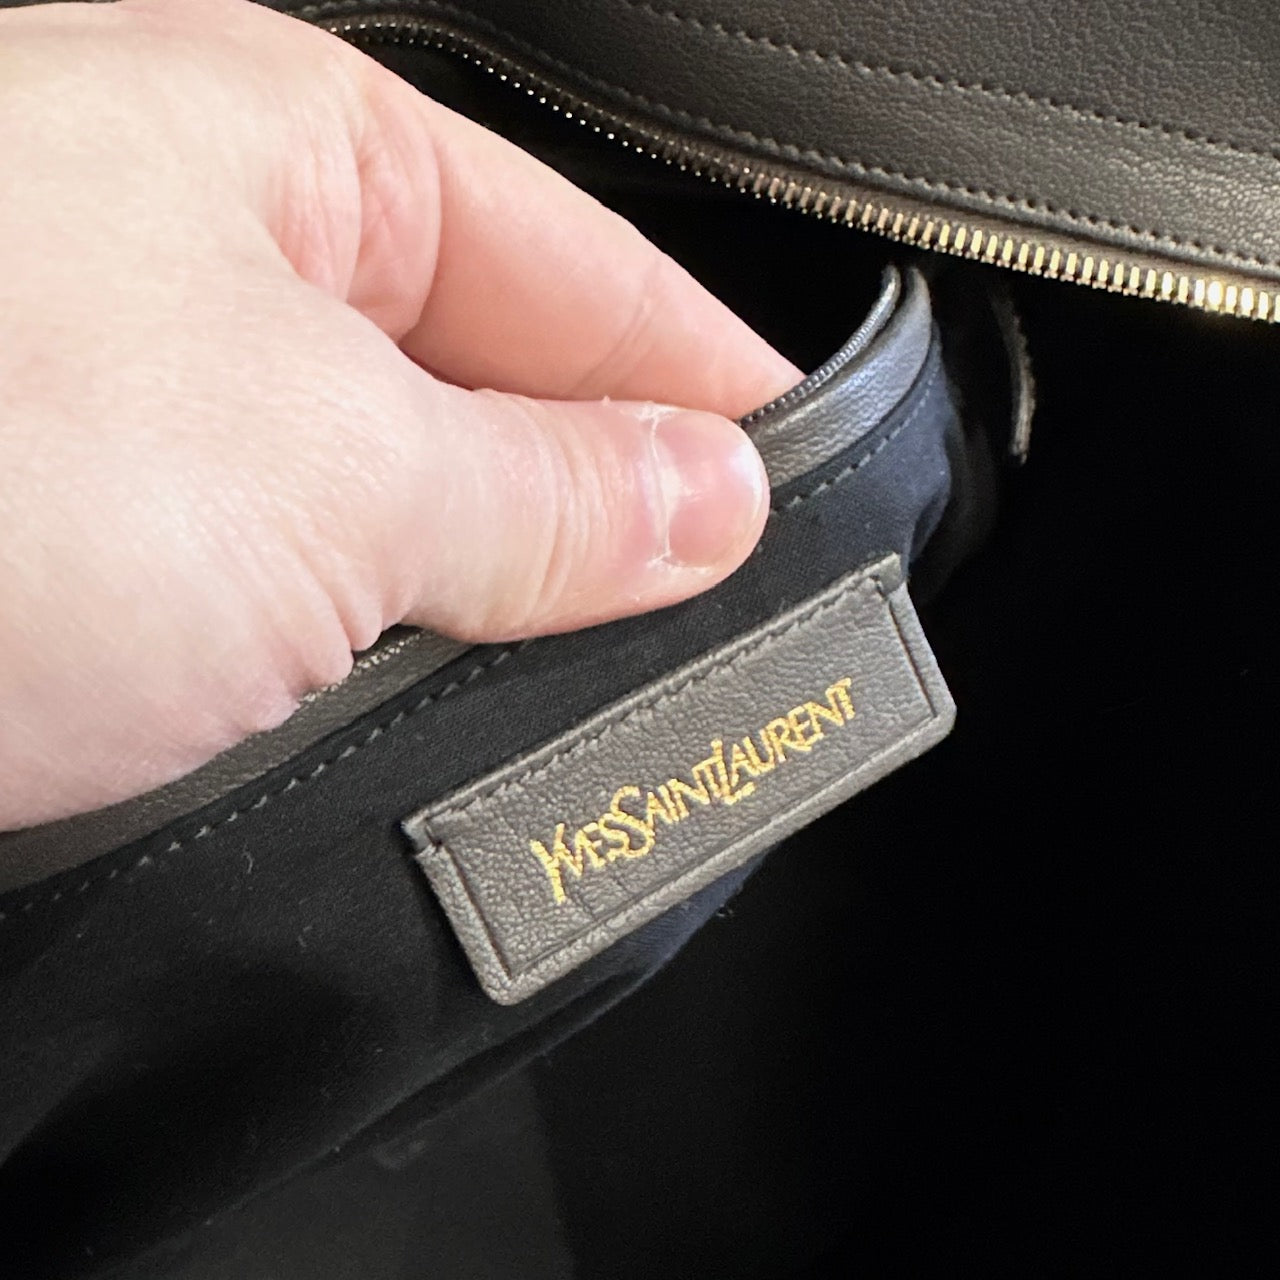 Chyc leather handbag Yves Saint Laurent Grey in Leather - 22411567